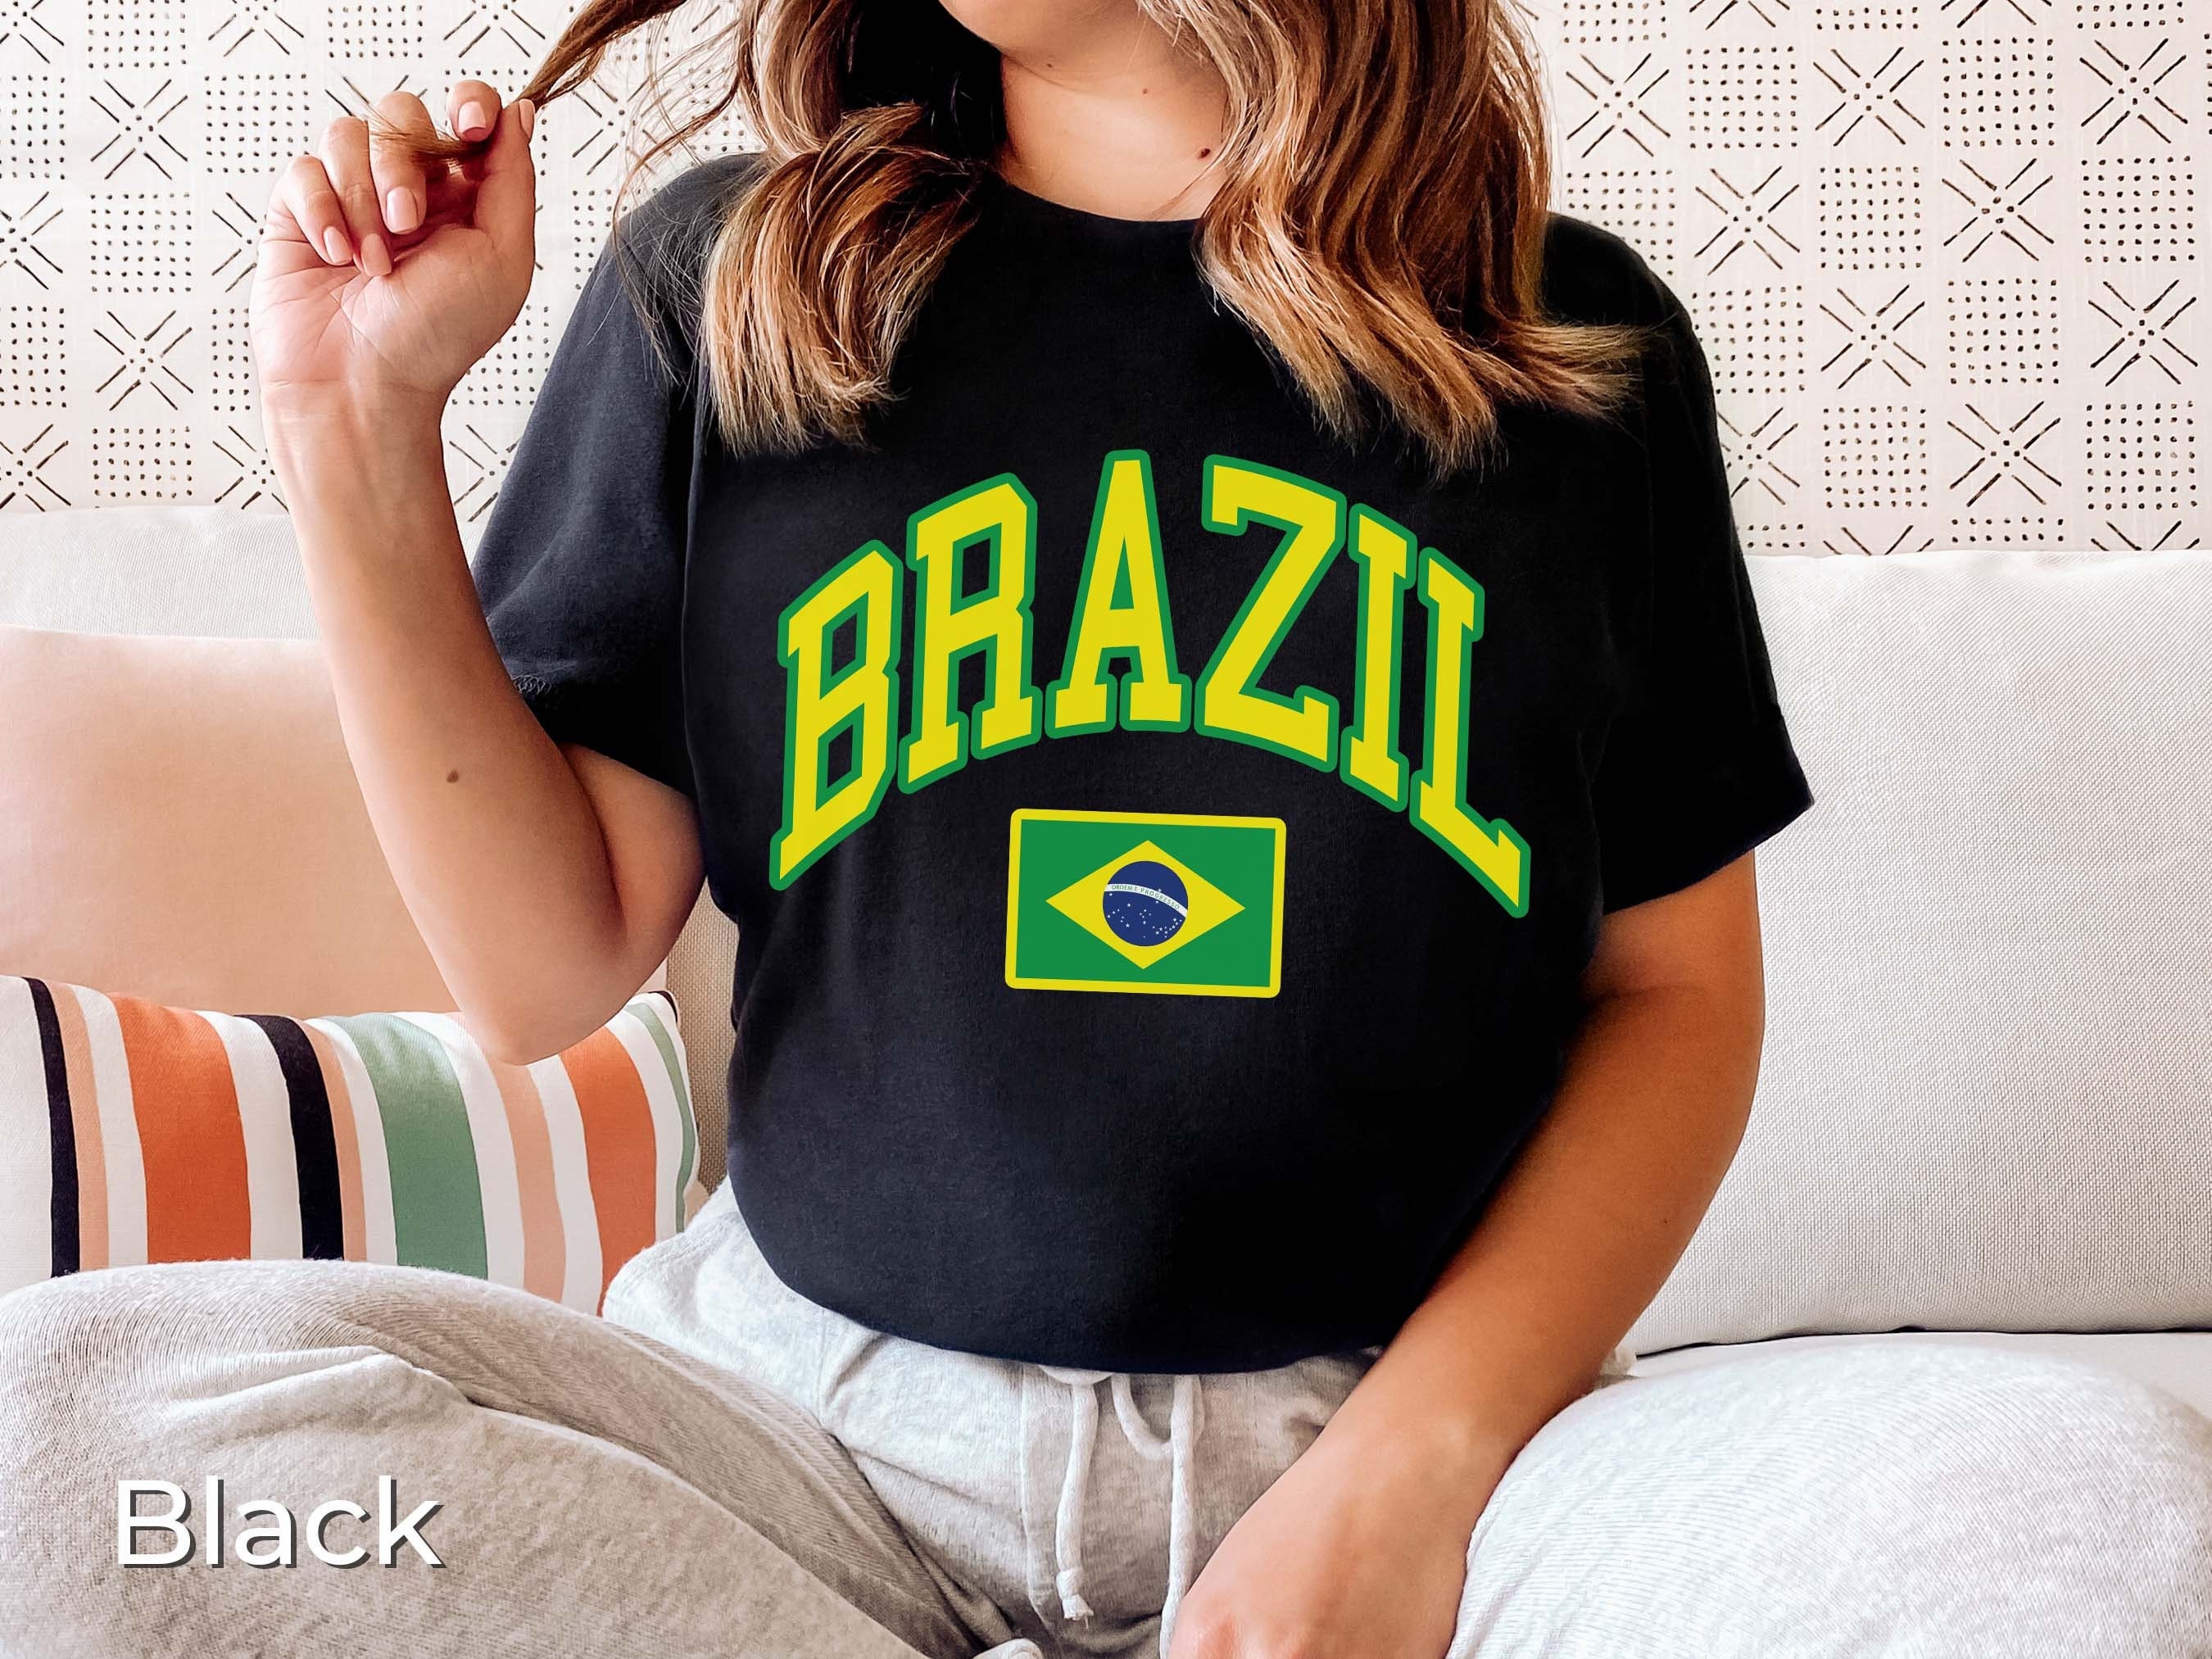 Brésil tee shirt -  Canada